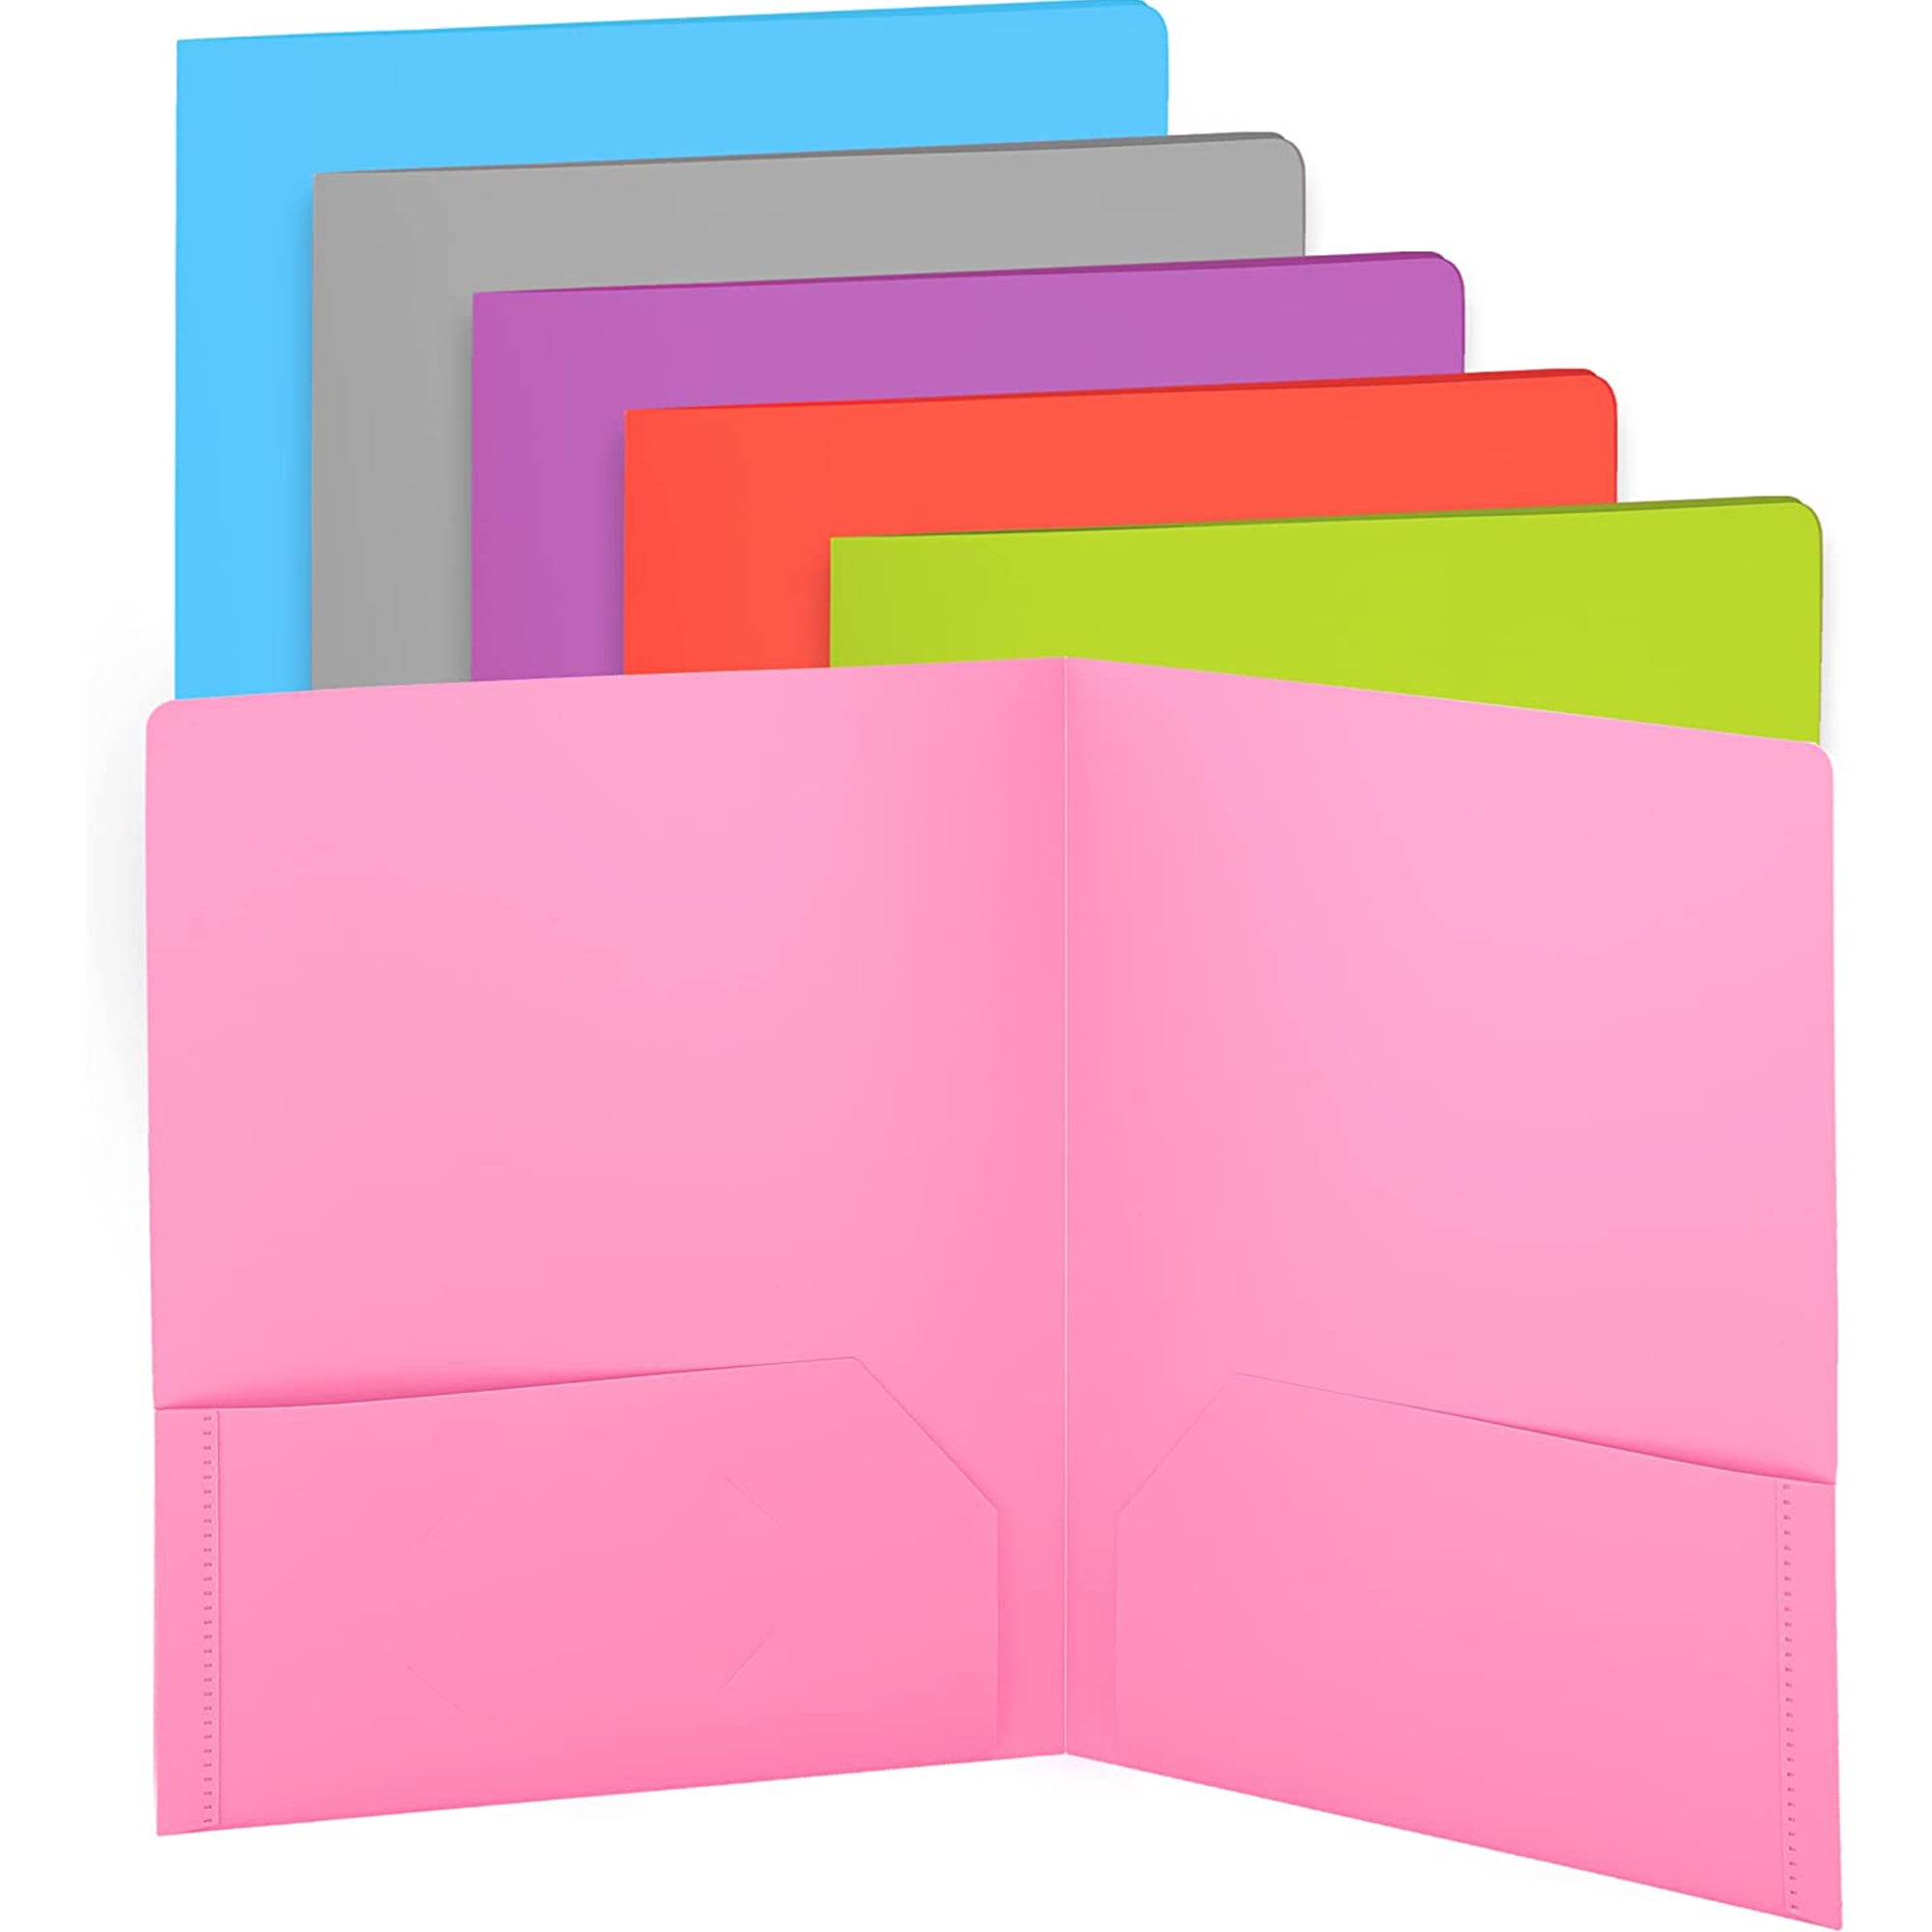 Shop for Vinyl & Plastic Pockets & Sleeves, File Folders